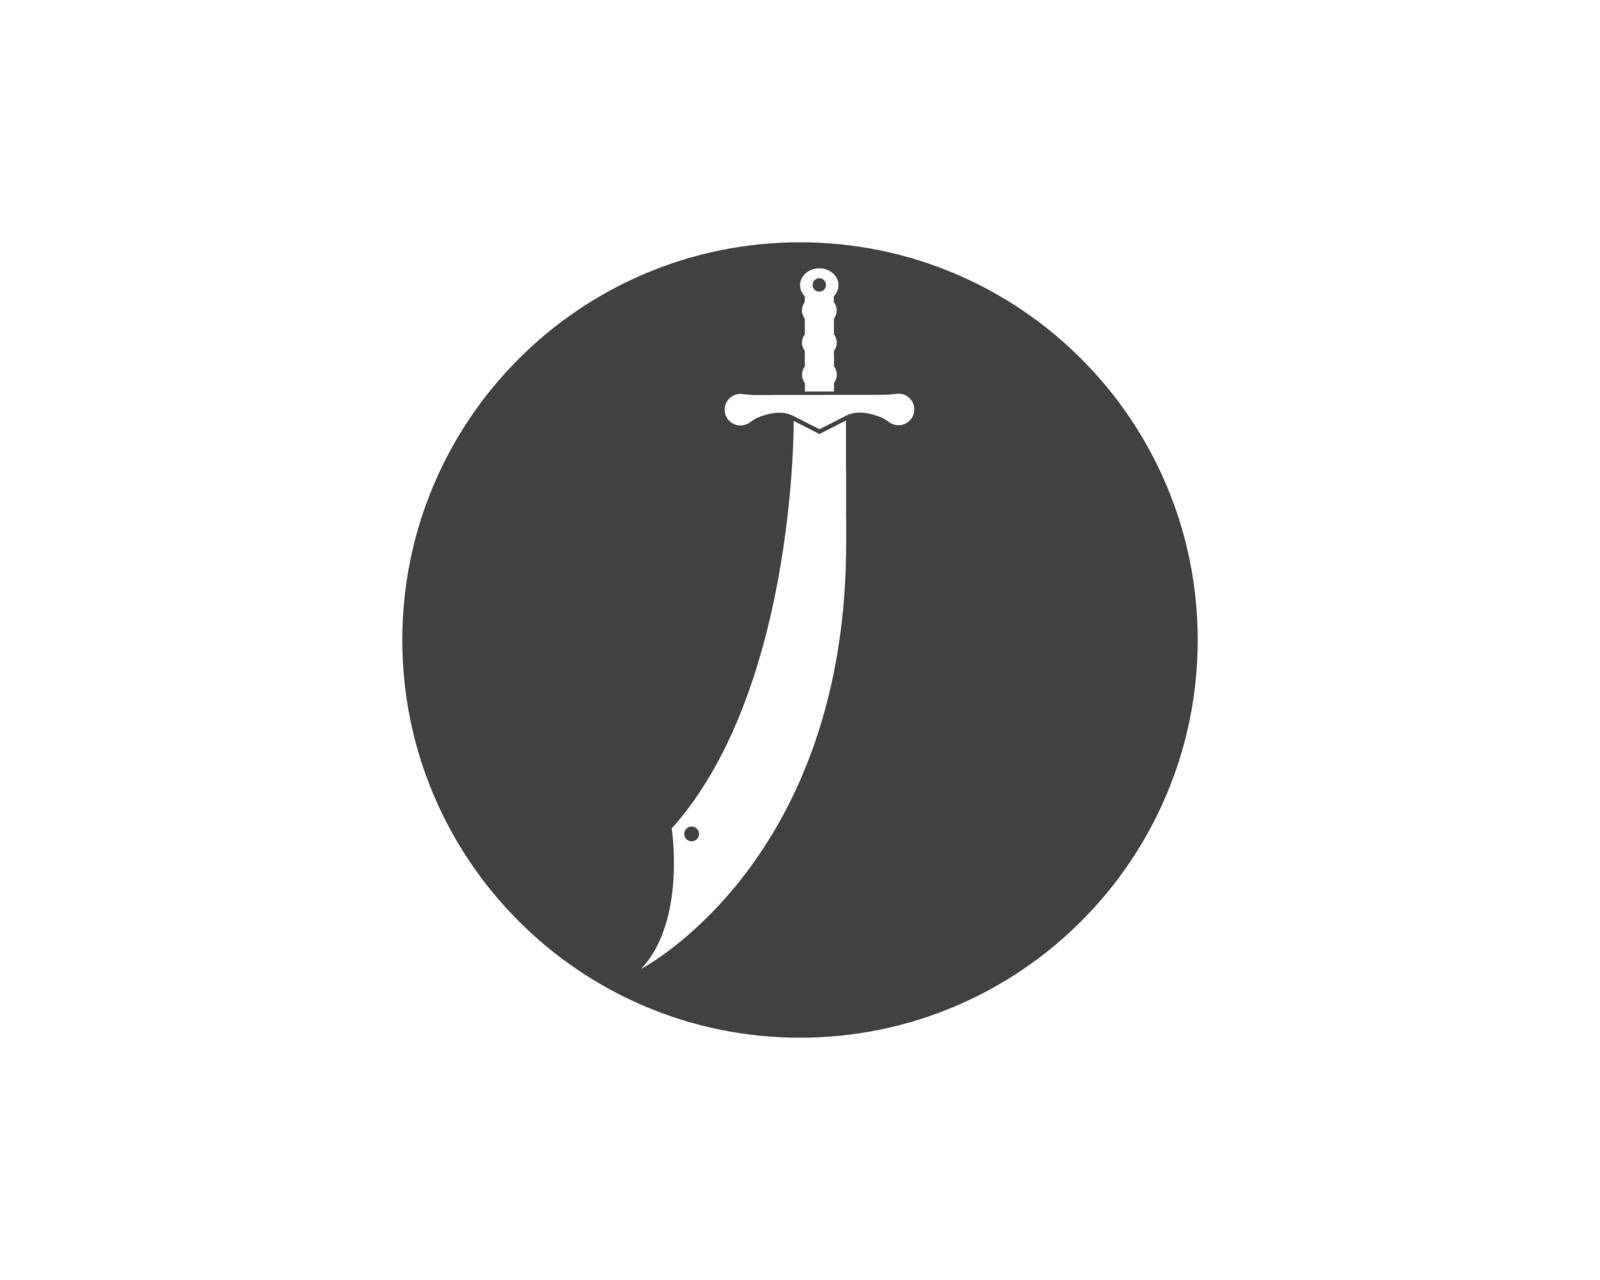 sword logo icon vector illustration design template